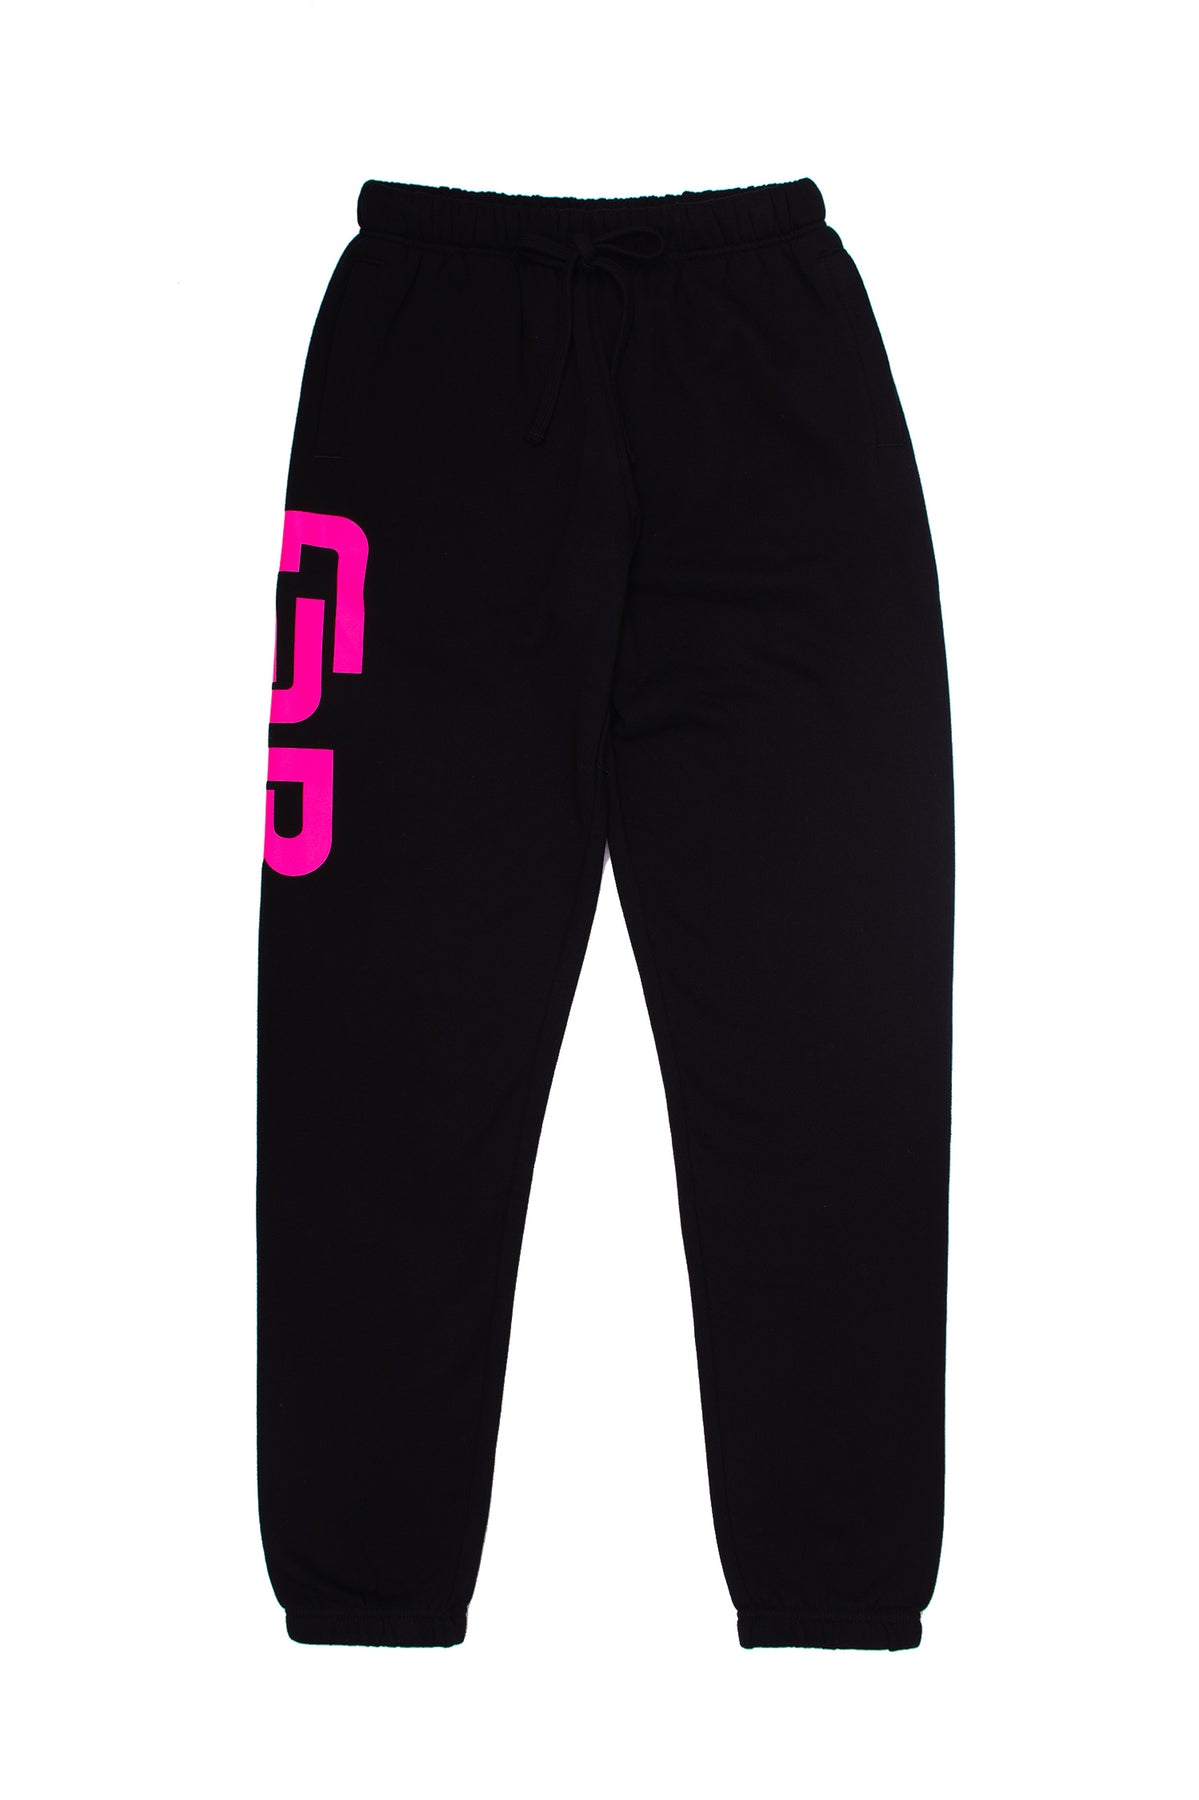 SJB Womens Performance Black / Pink Athletic Pants size XL